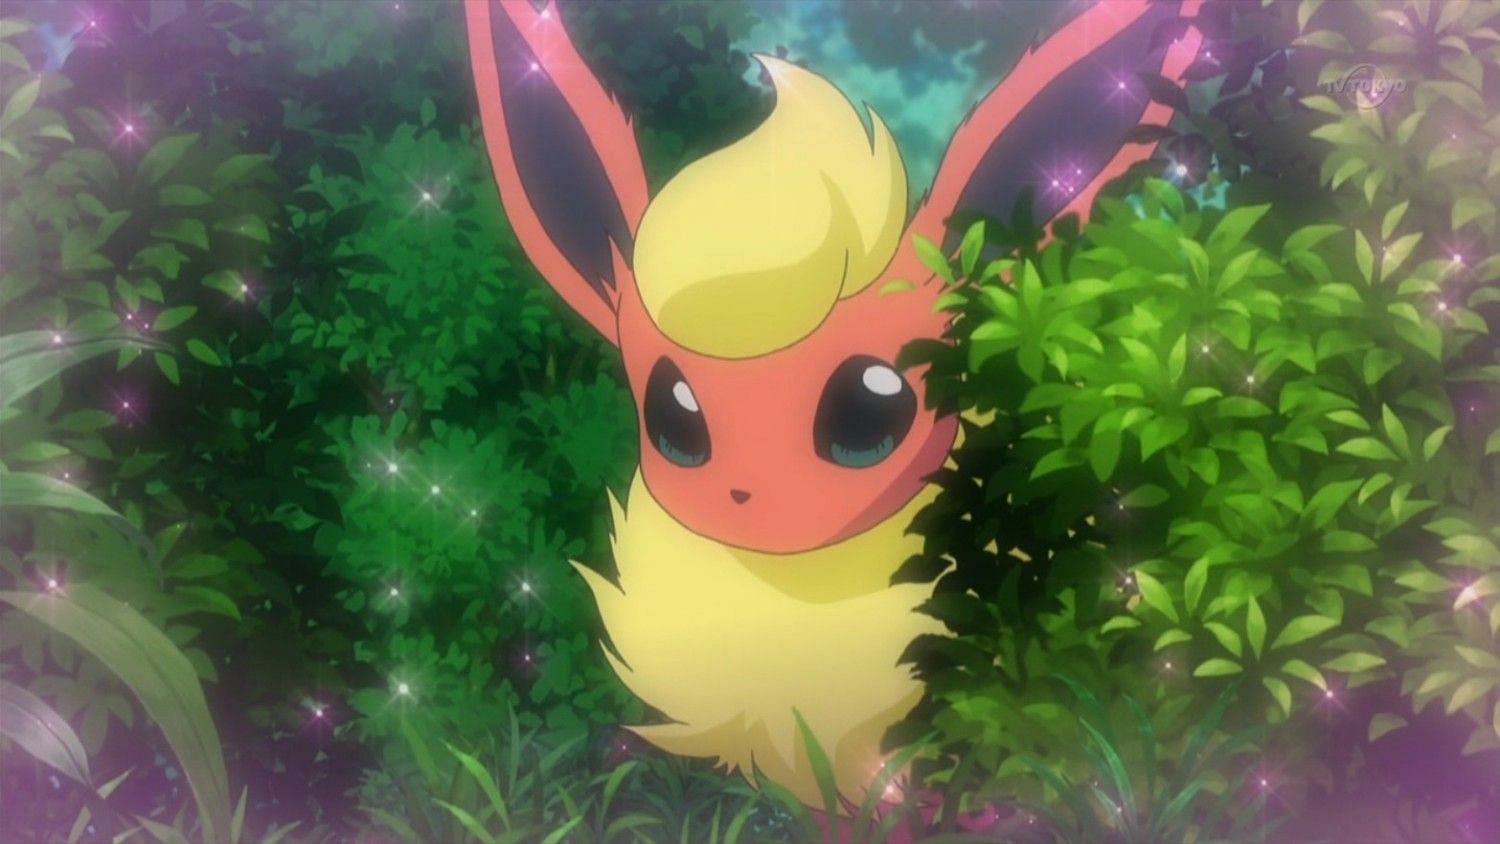 Flareon in the anime. (Image via The Pokemon Company)